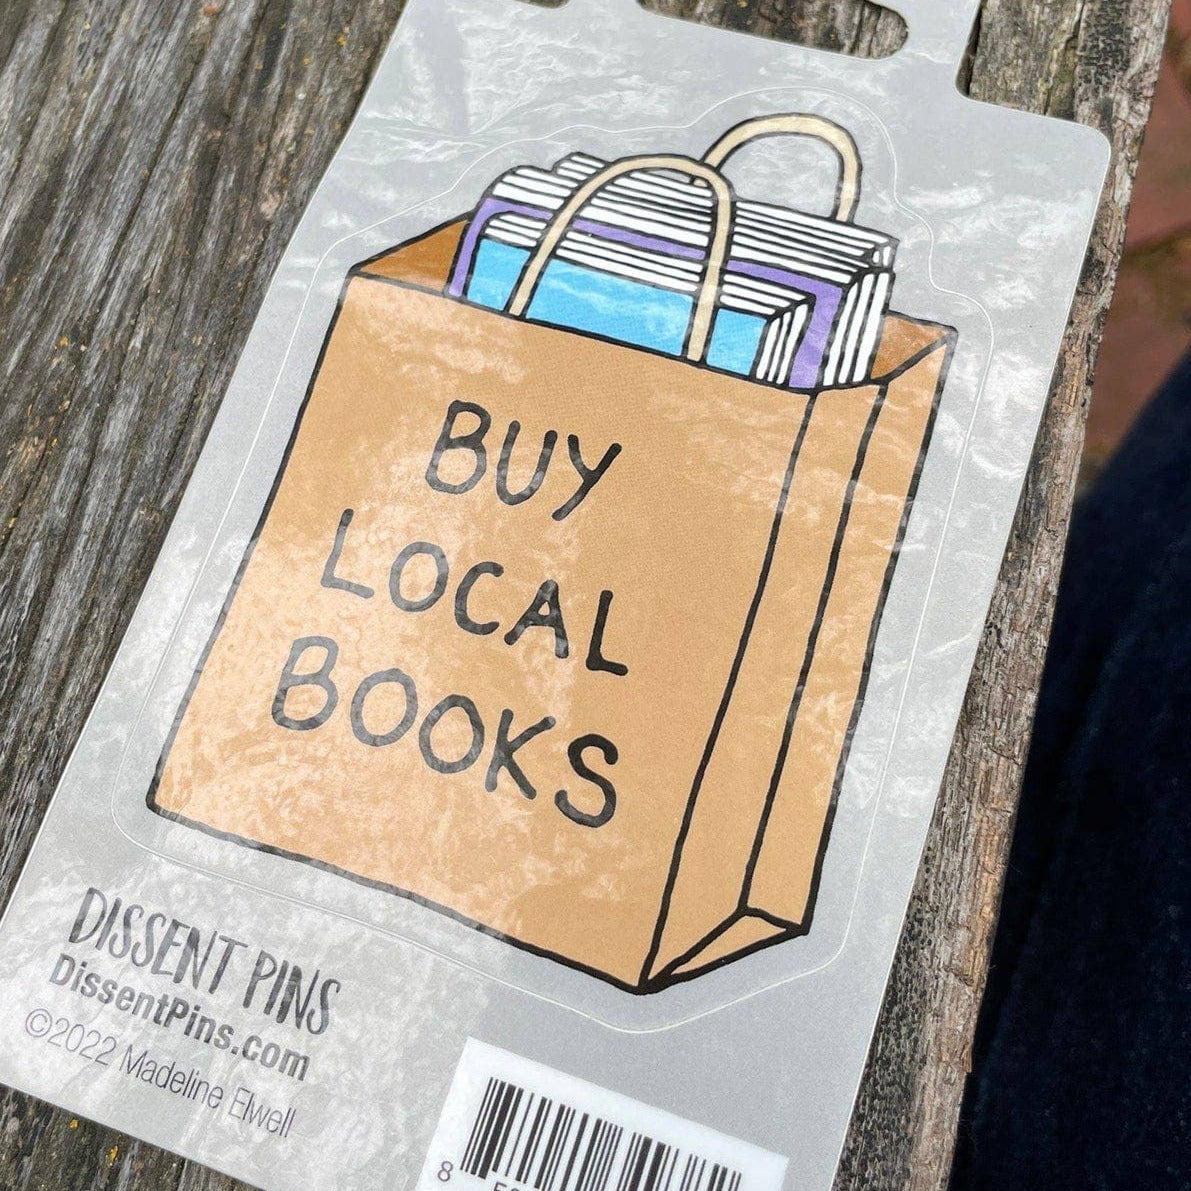 Dissent Pins - Buy Local Books Sticker